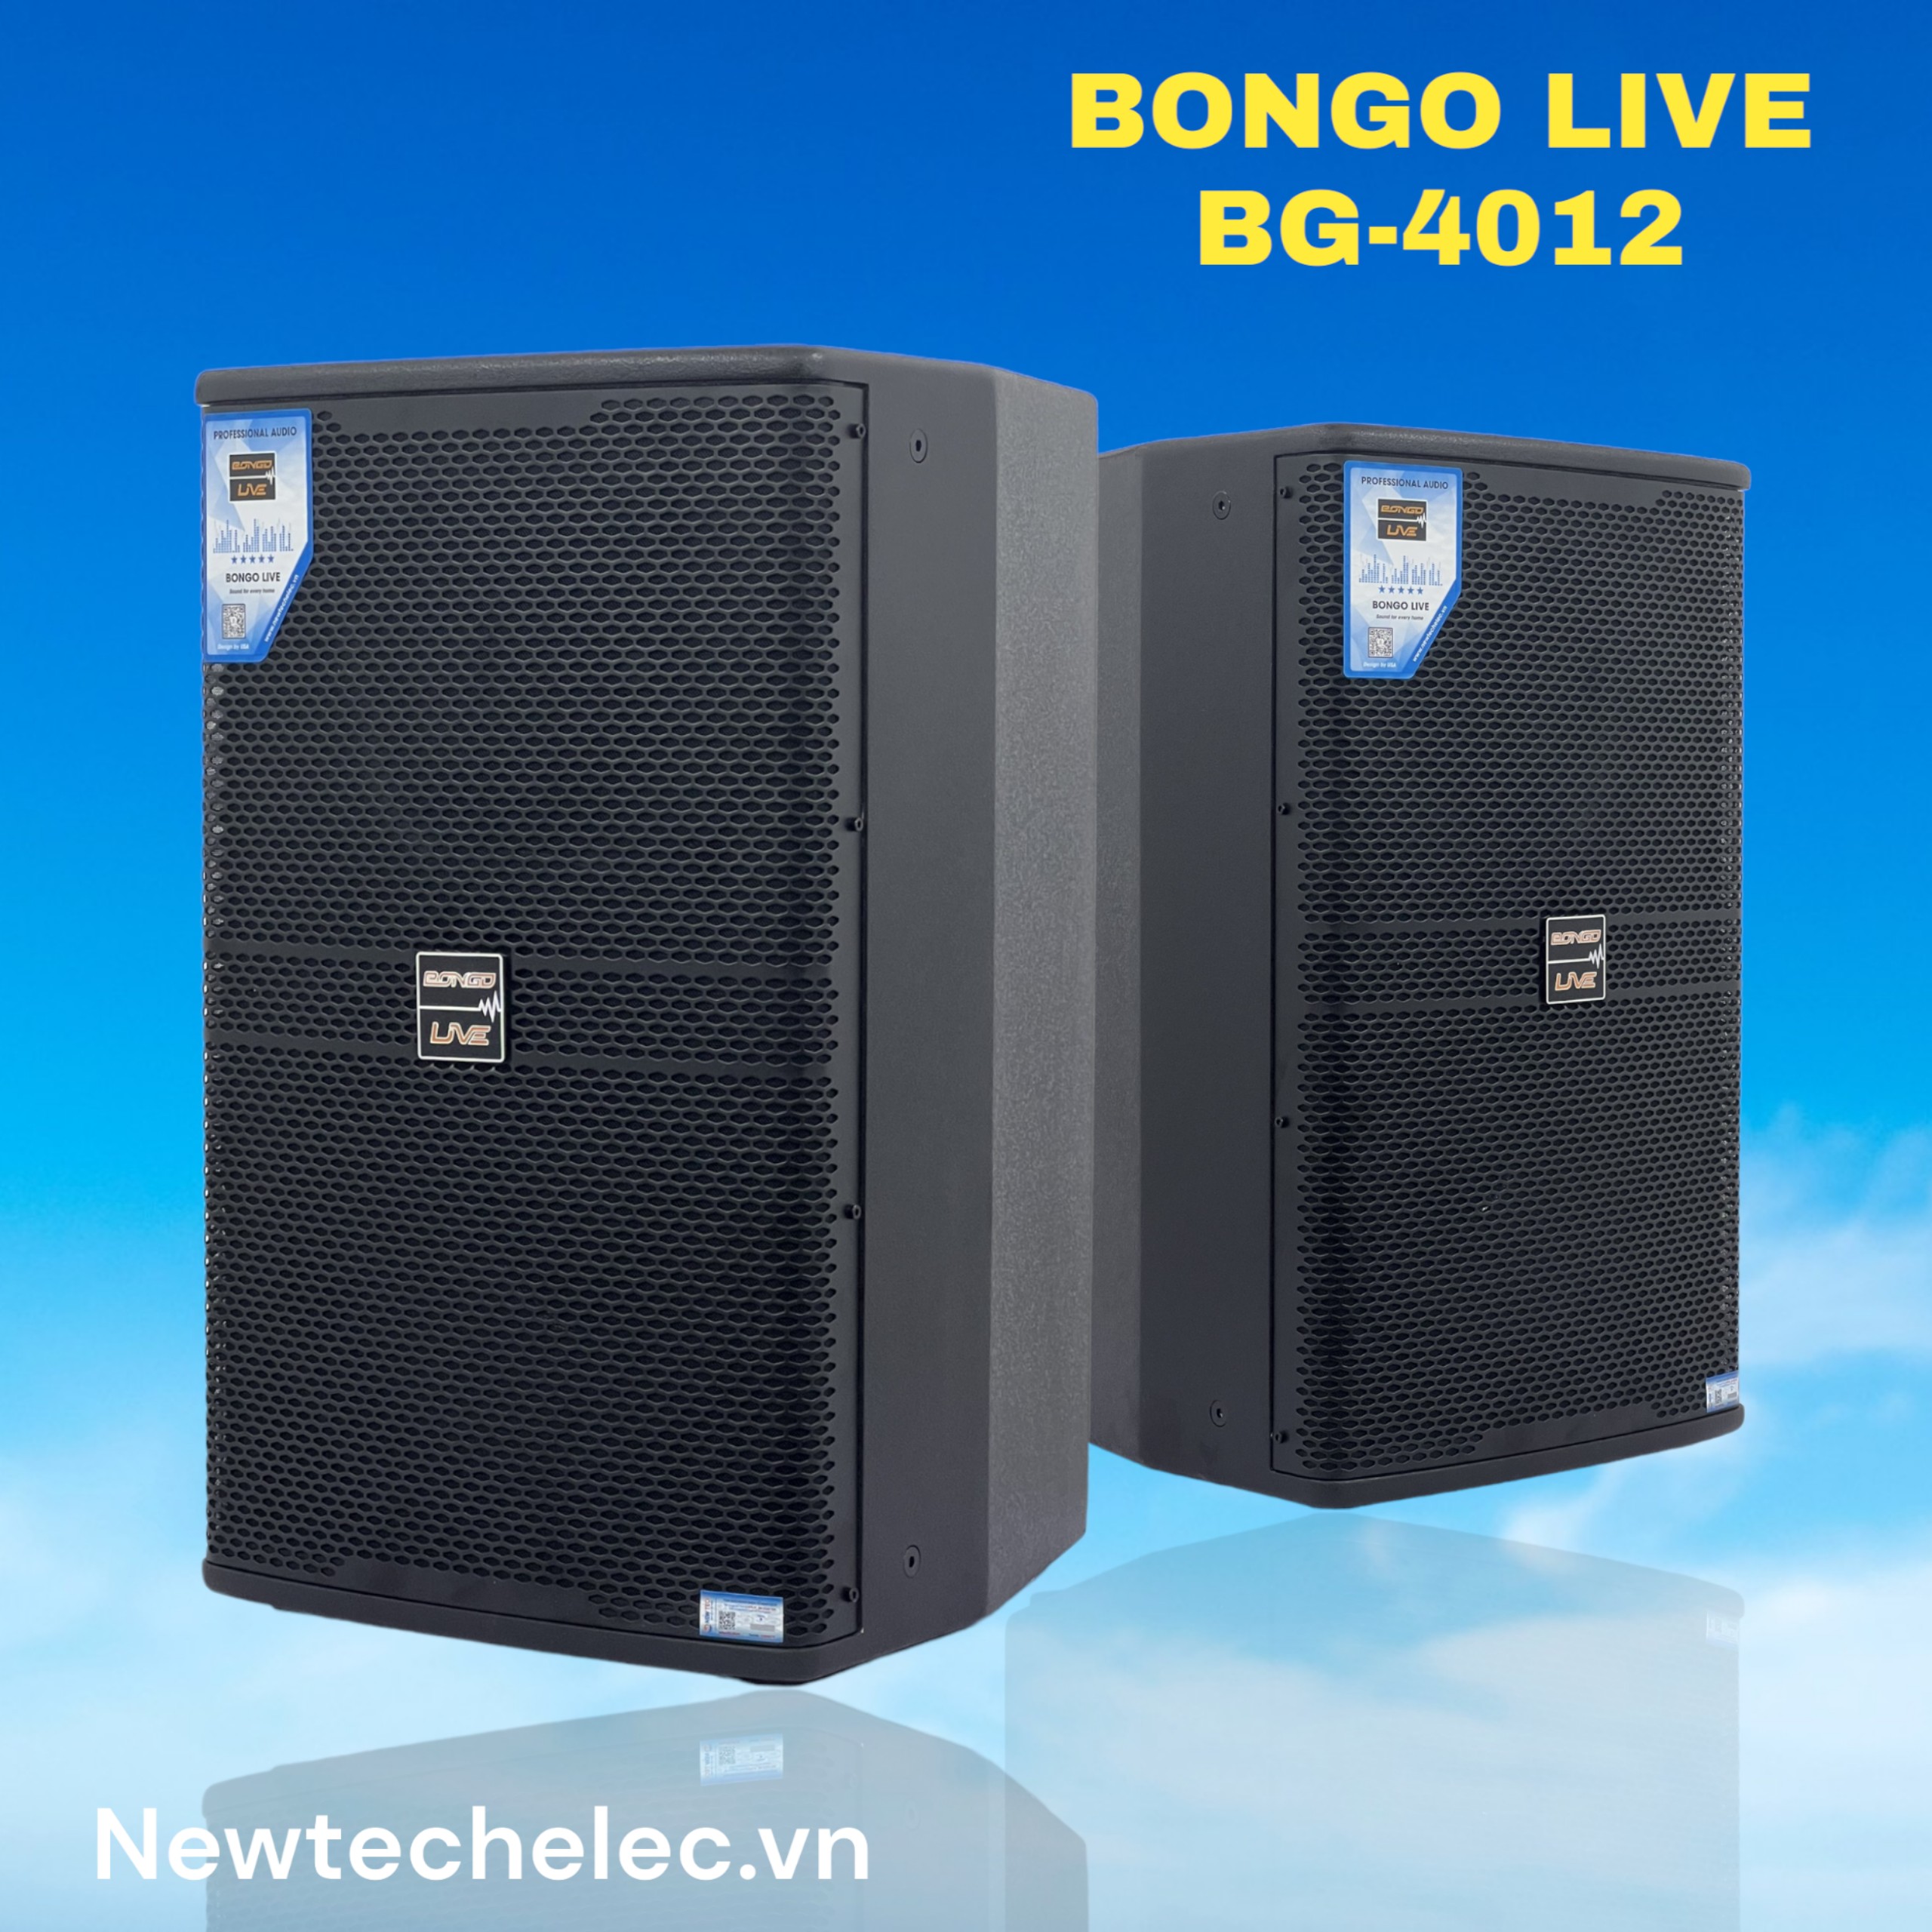 Loa Full BONGO LIVE BG-4012